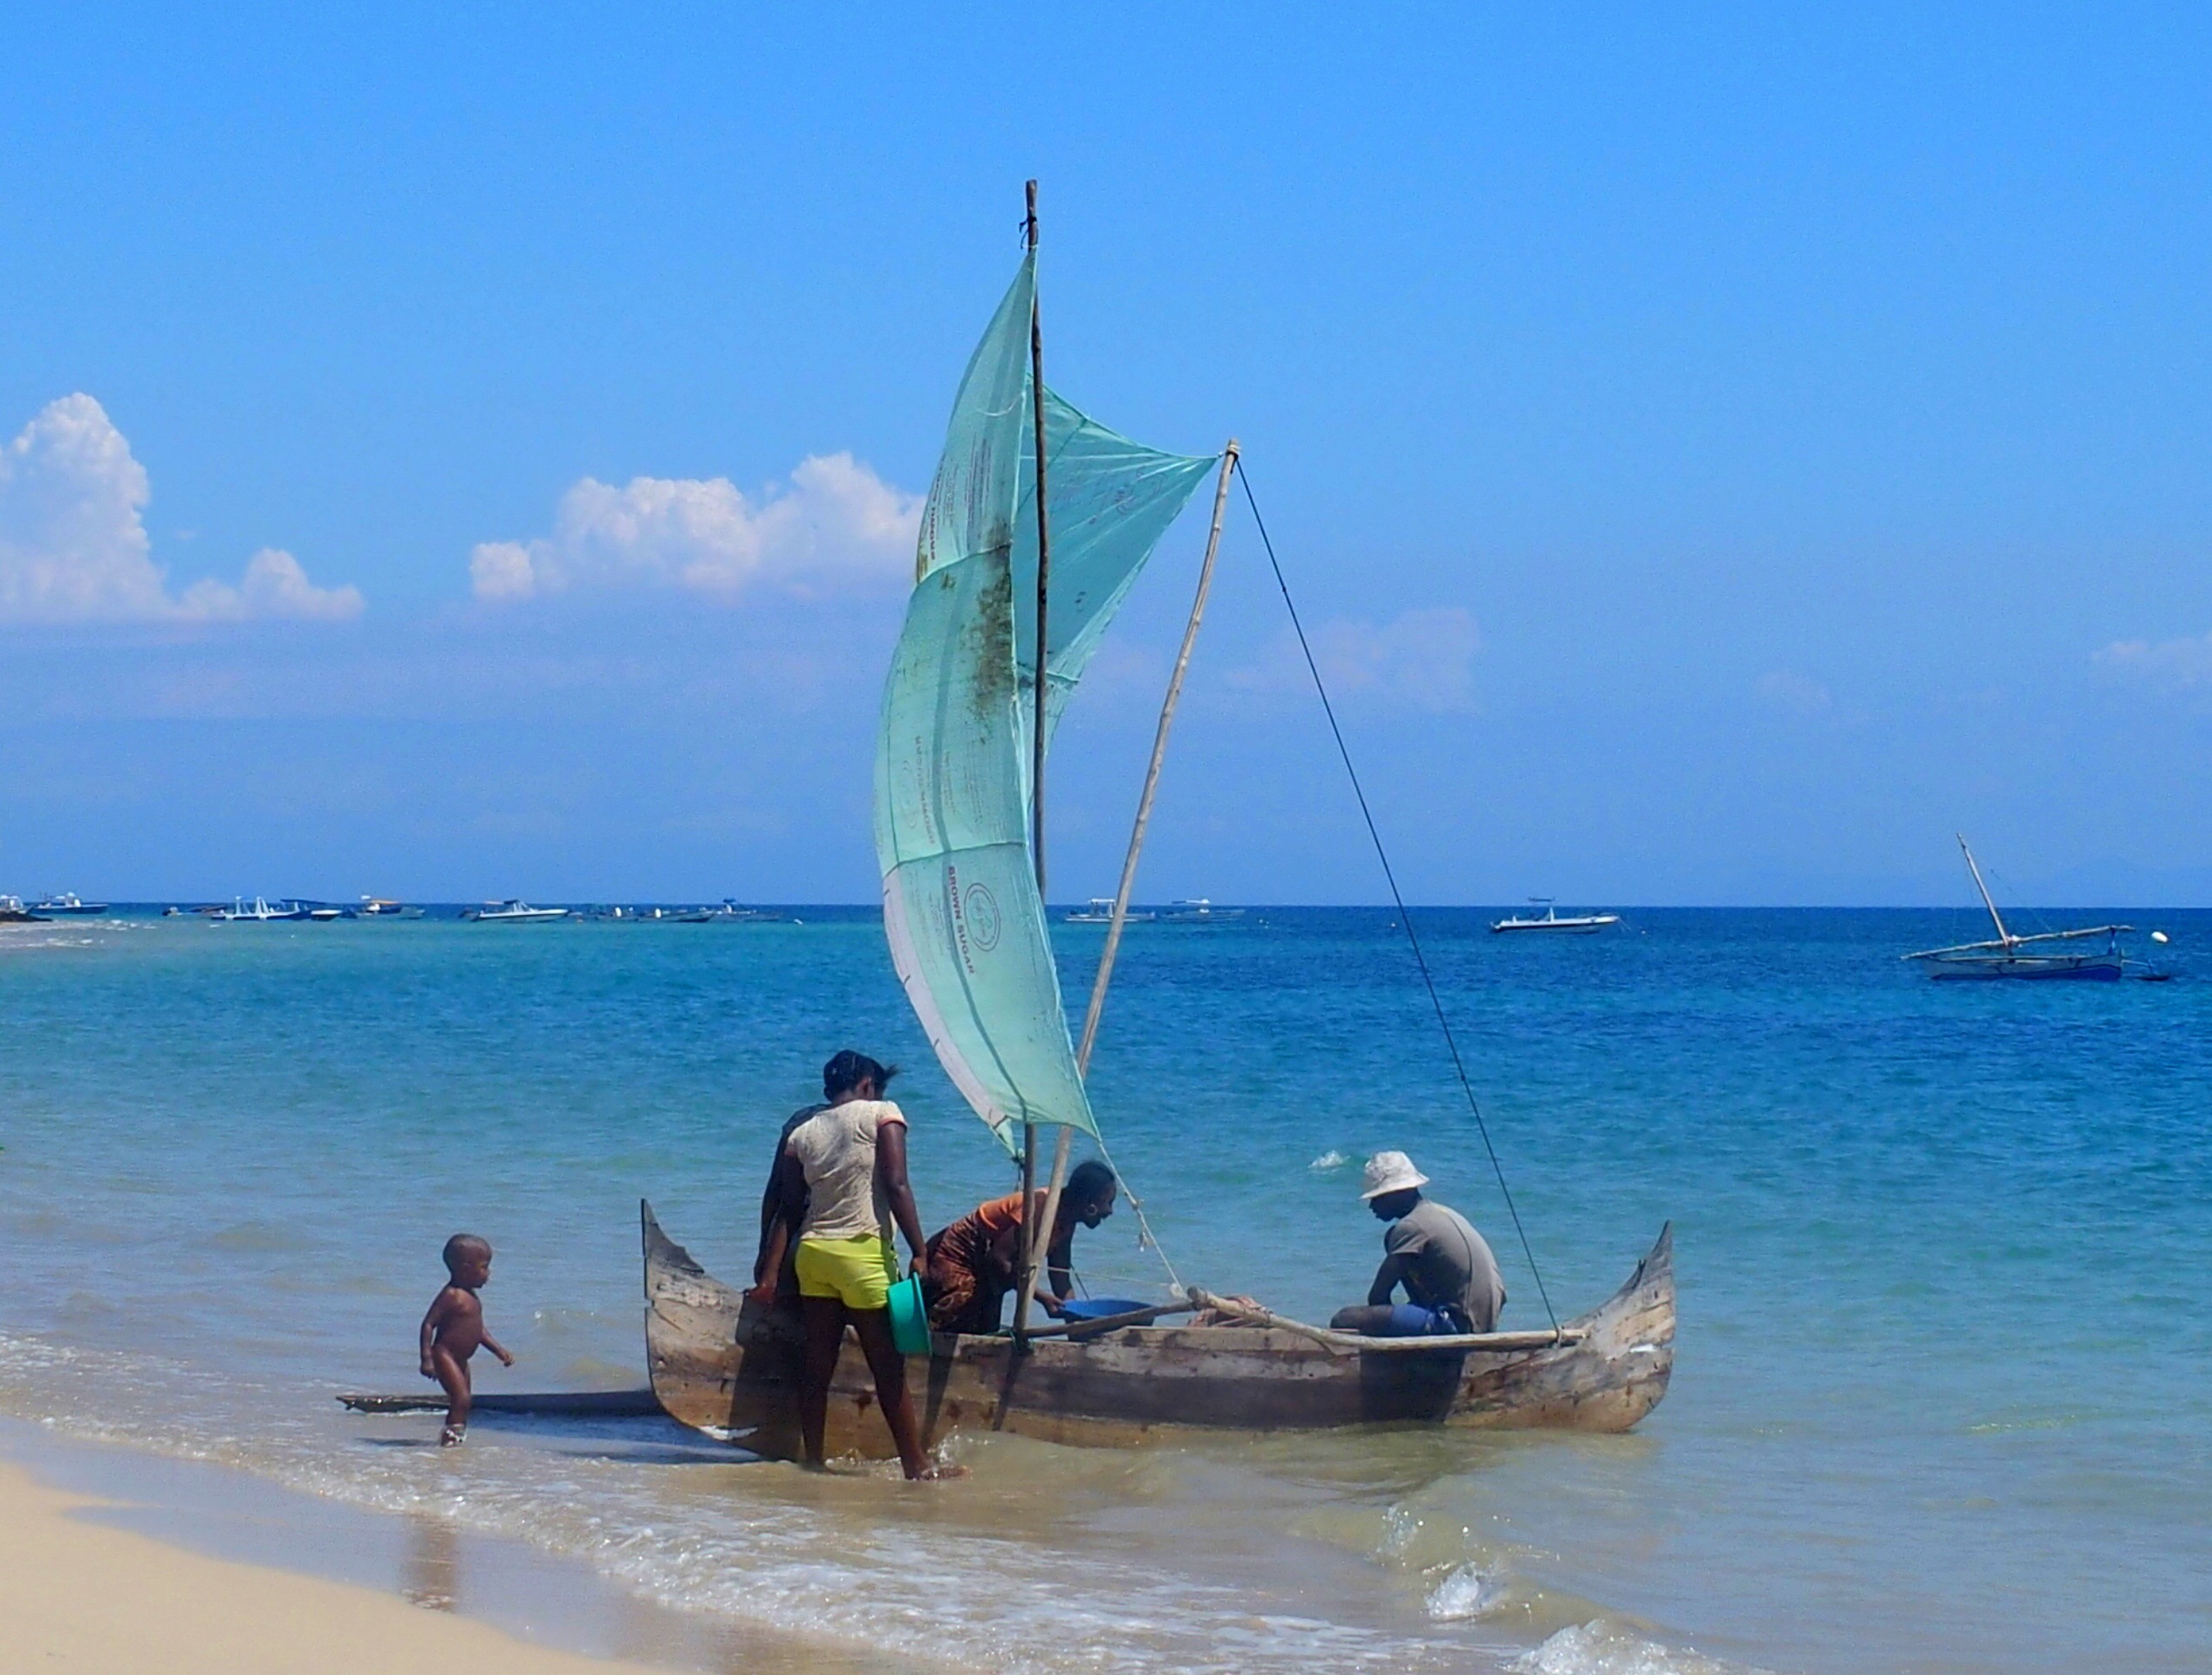 Achat-poissons-arrivée-bateau-Nosy-Be-Madagascar.